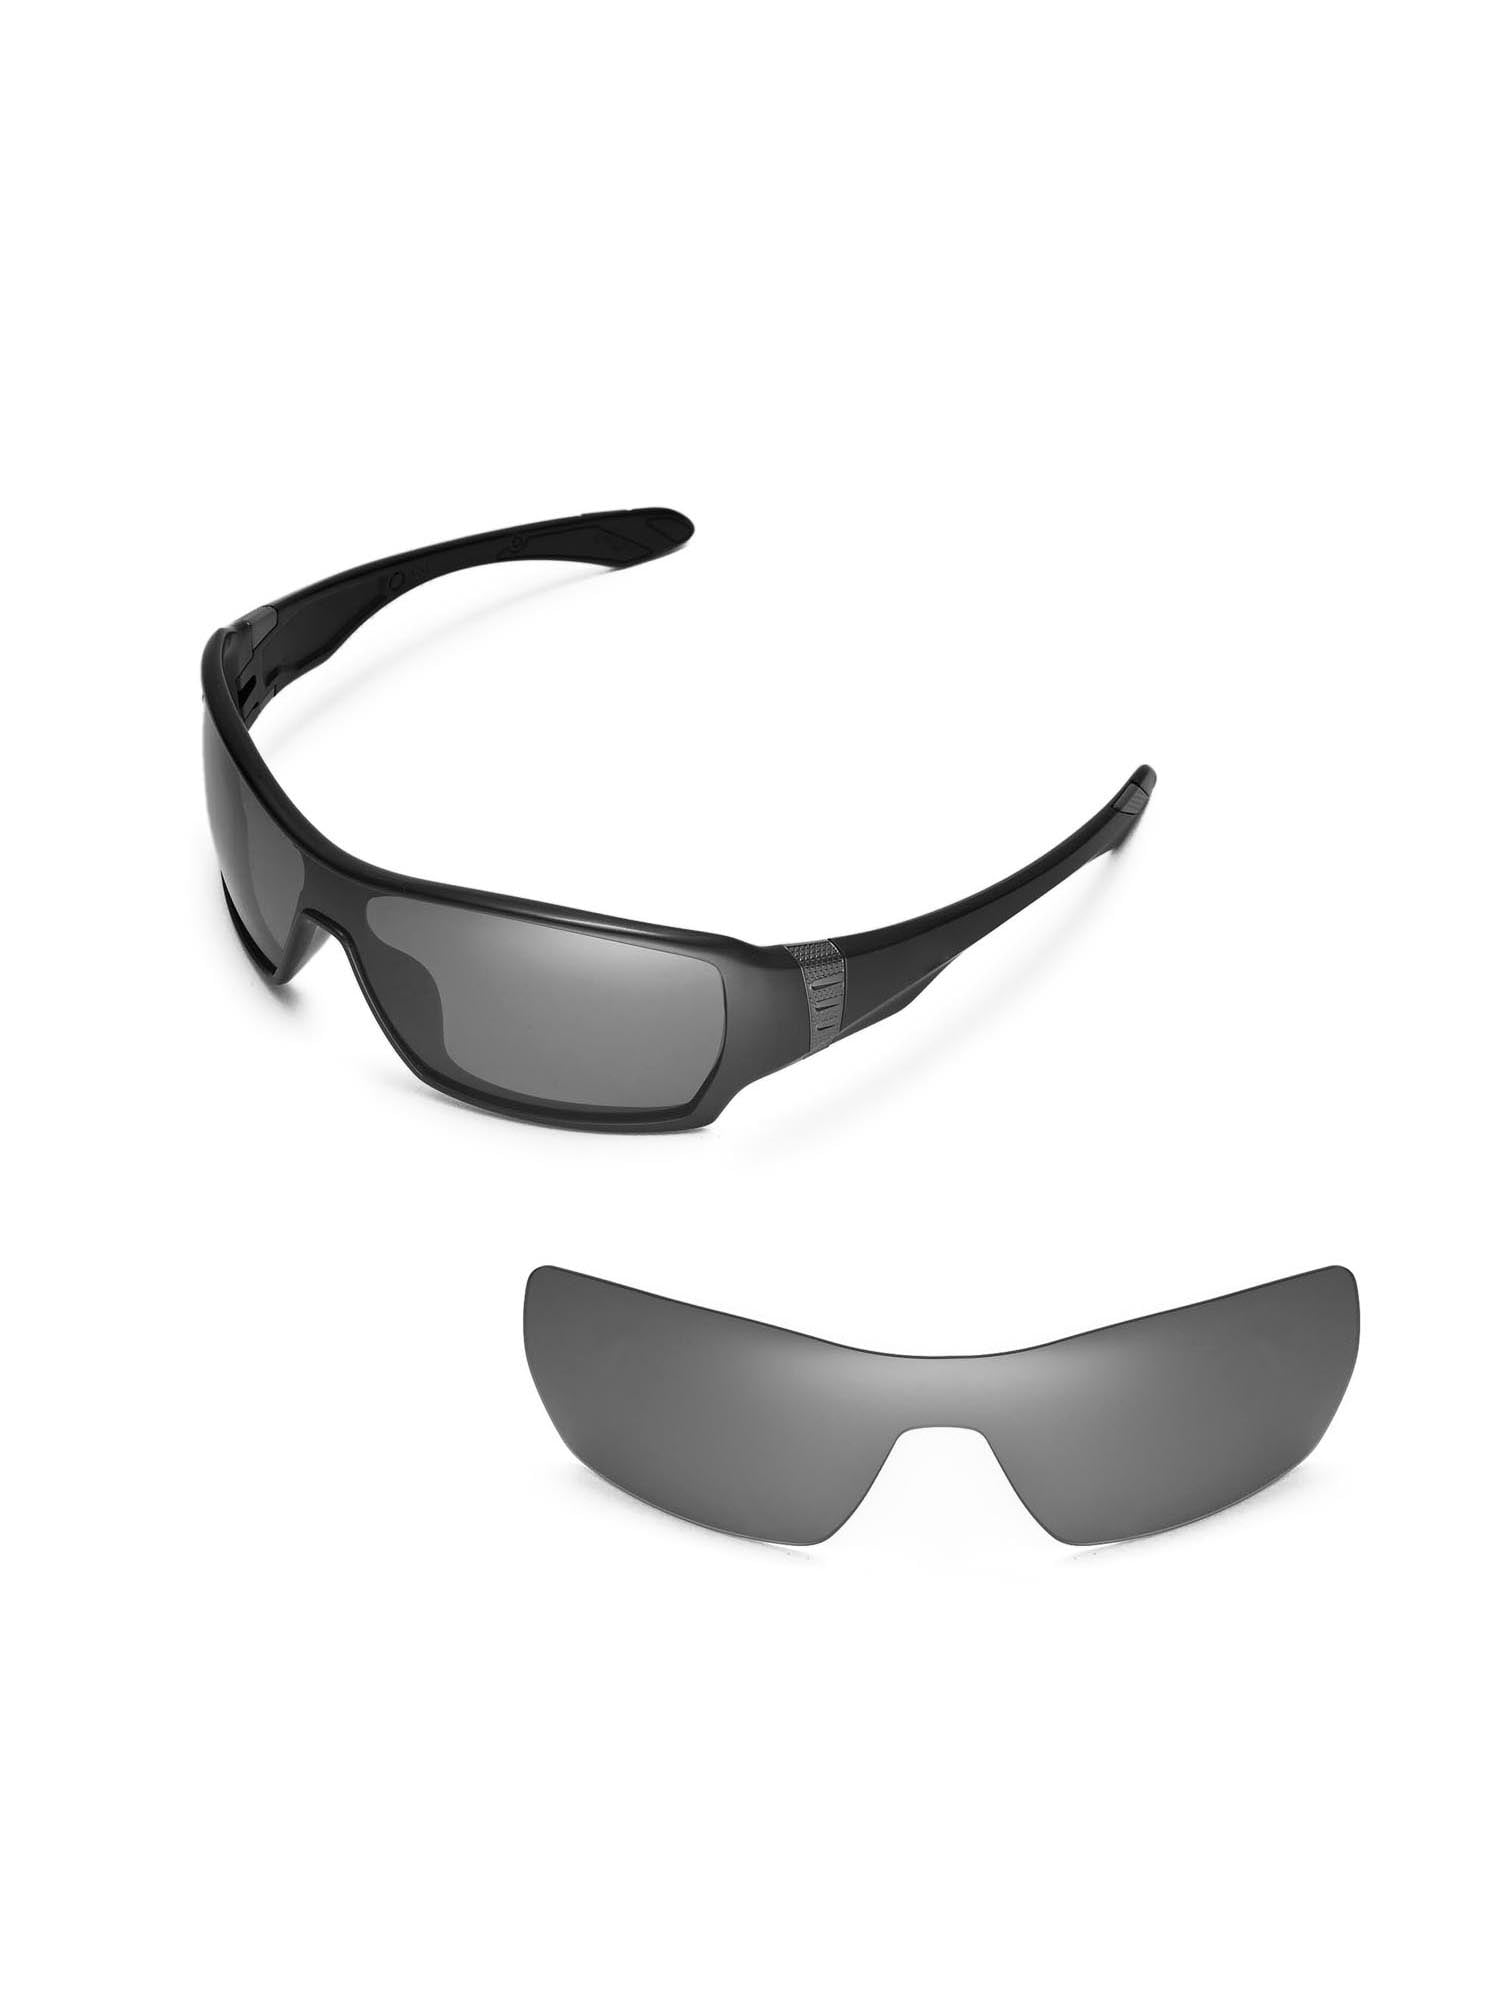 Walleva Black Polarized Replacement Lenses for Oakley Offshoot Sunglasses -  